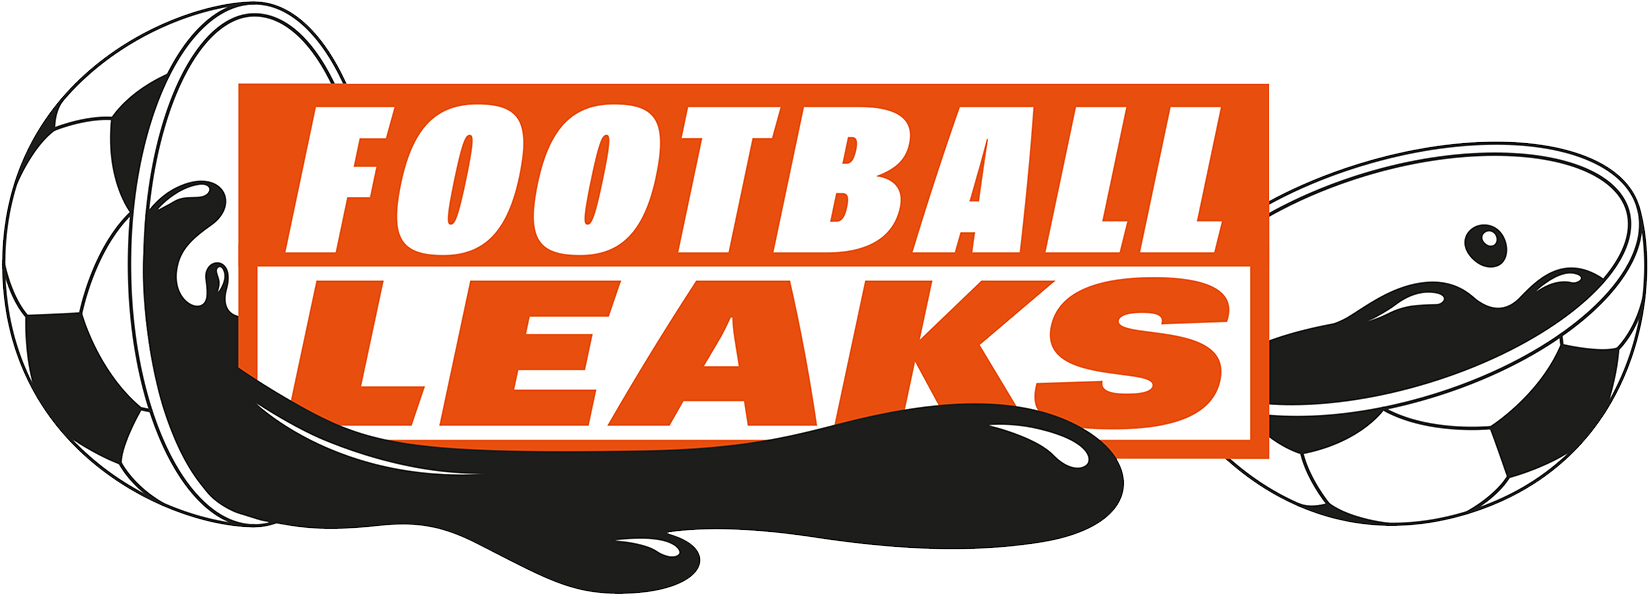 Football Leaks 00-fl Banner - Der Spiegel Football Leaks Clipart (2000x775), Png Download